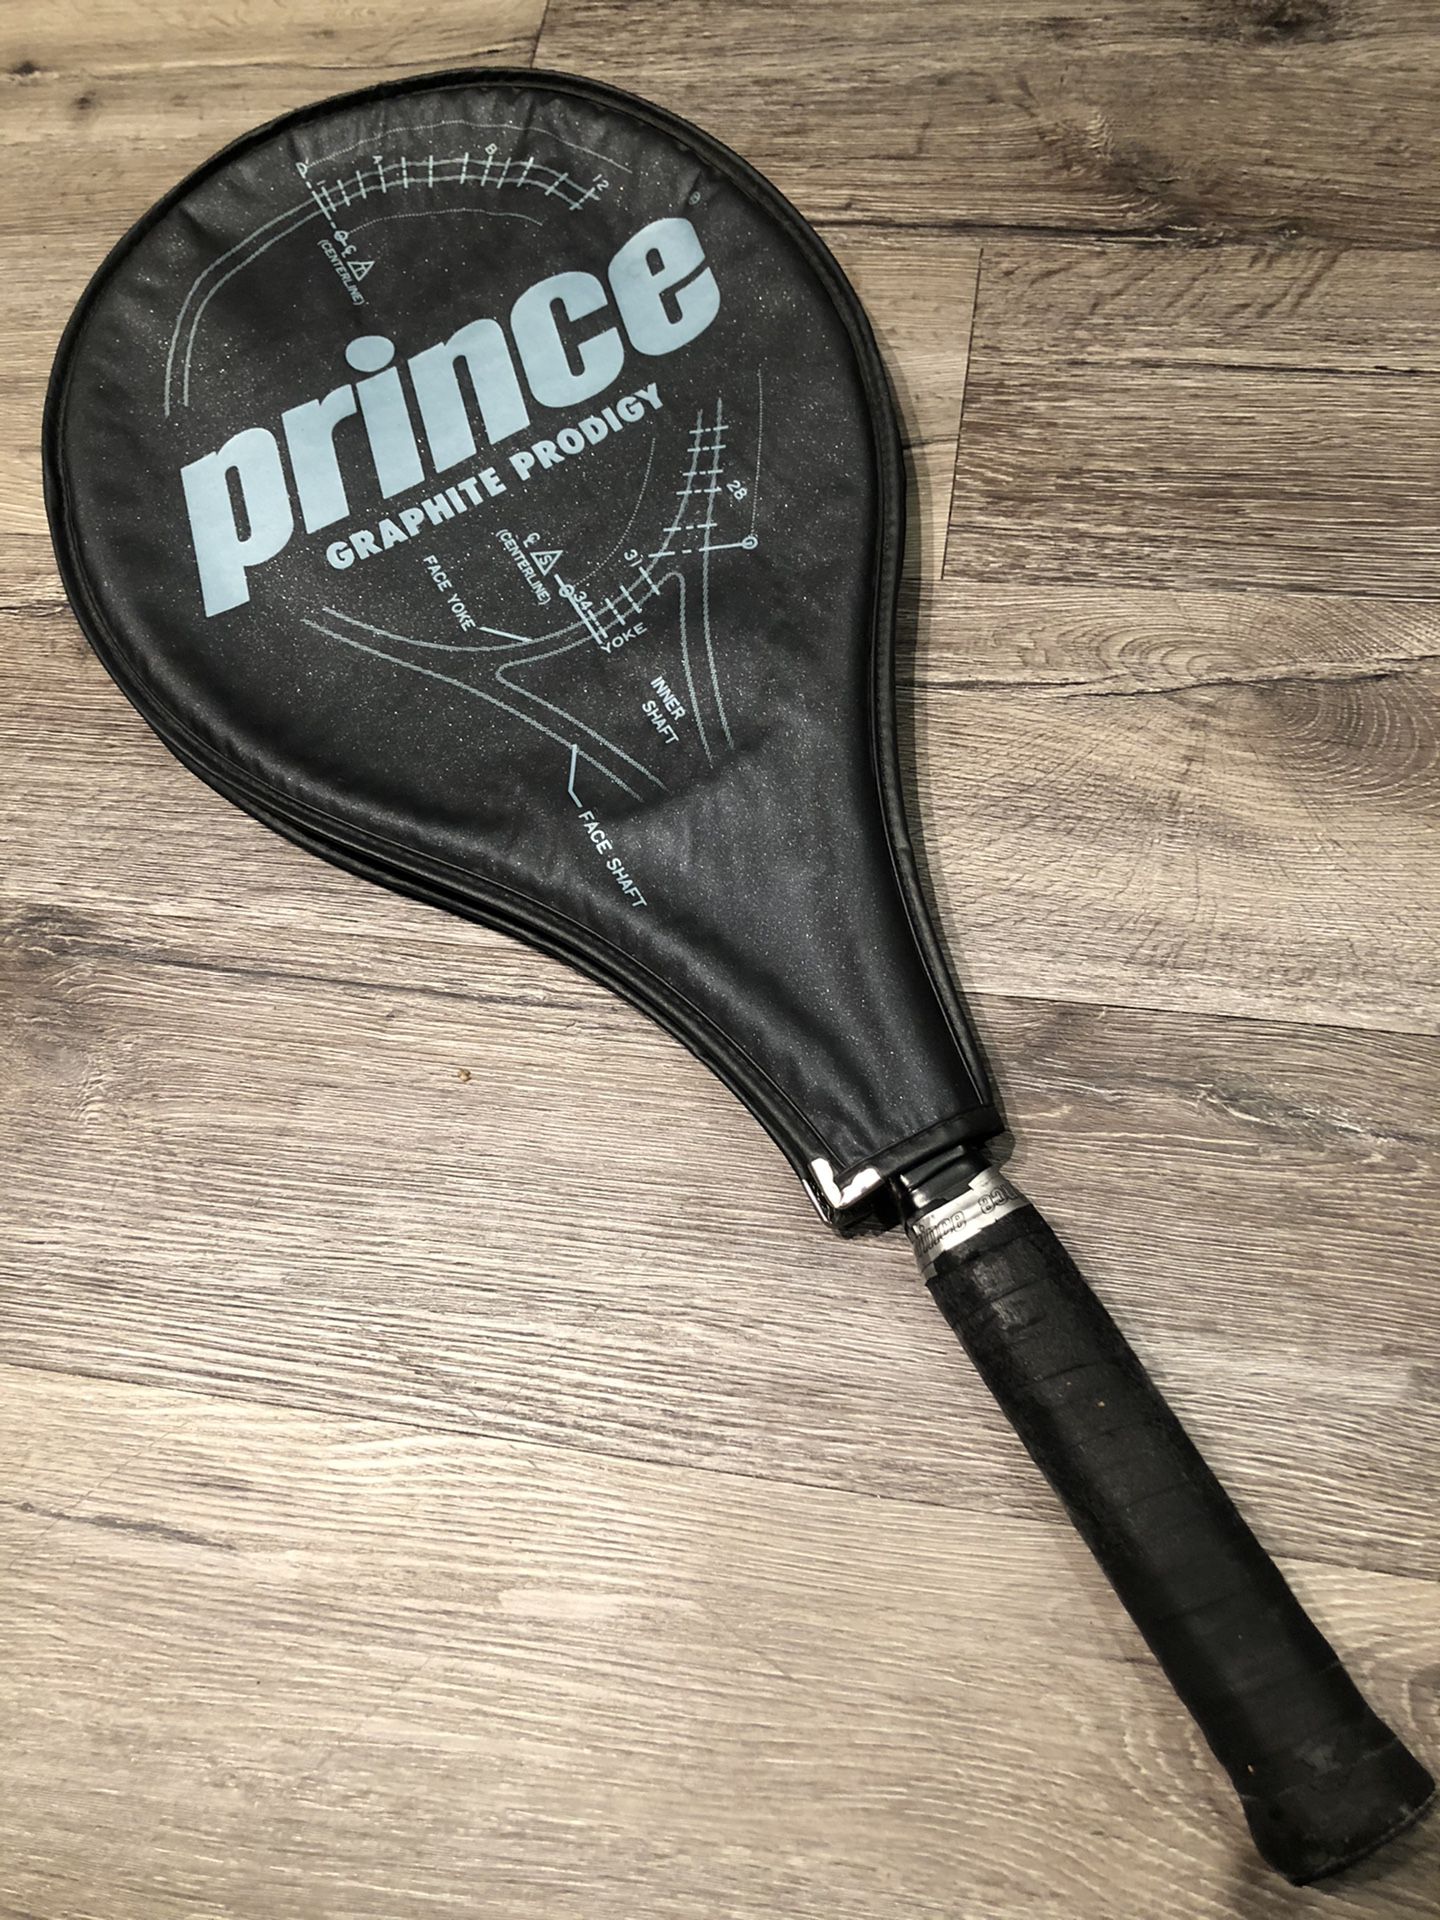 Prince graphite pro prodigy oversize tennis racket